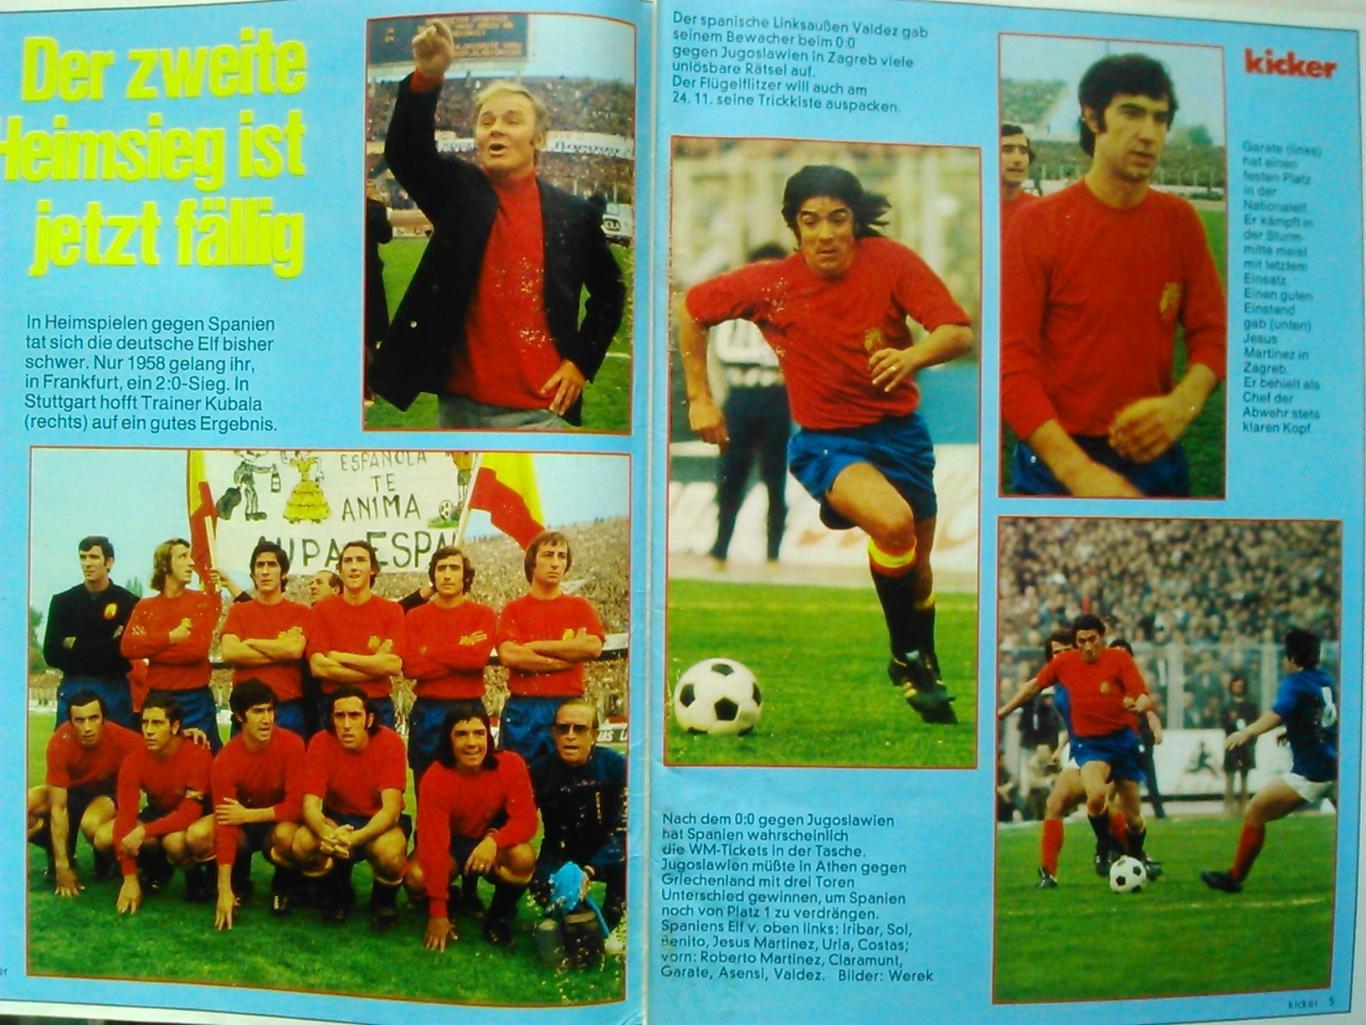 KICKER № 94 1973 (ФРГ) Футбол-Испания, Автомагазин ст.66-74. Оптом скидки до 45% 1